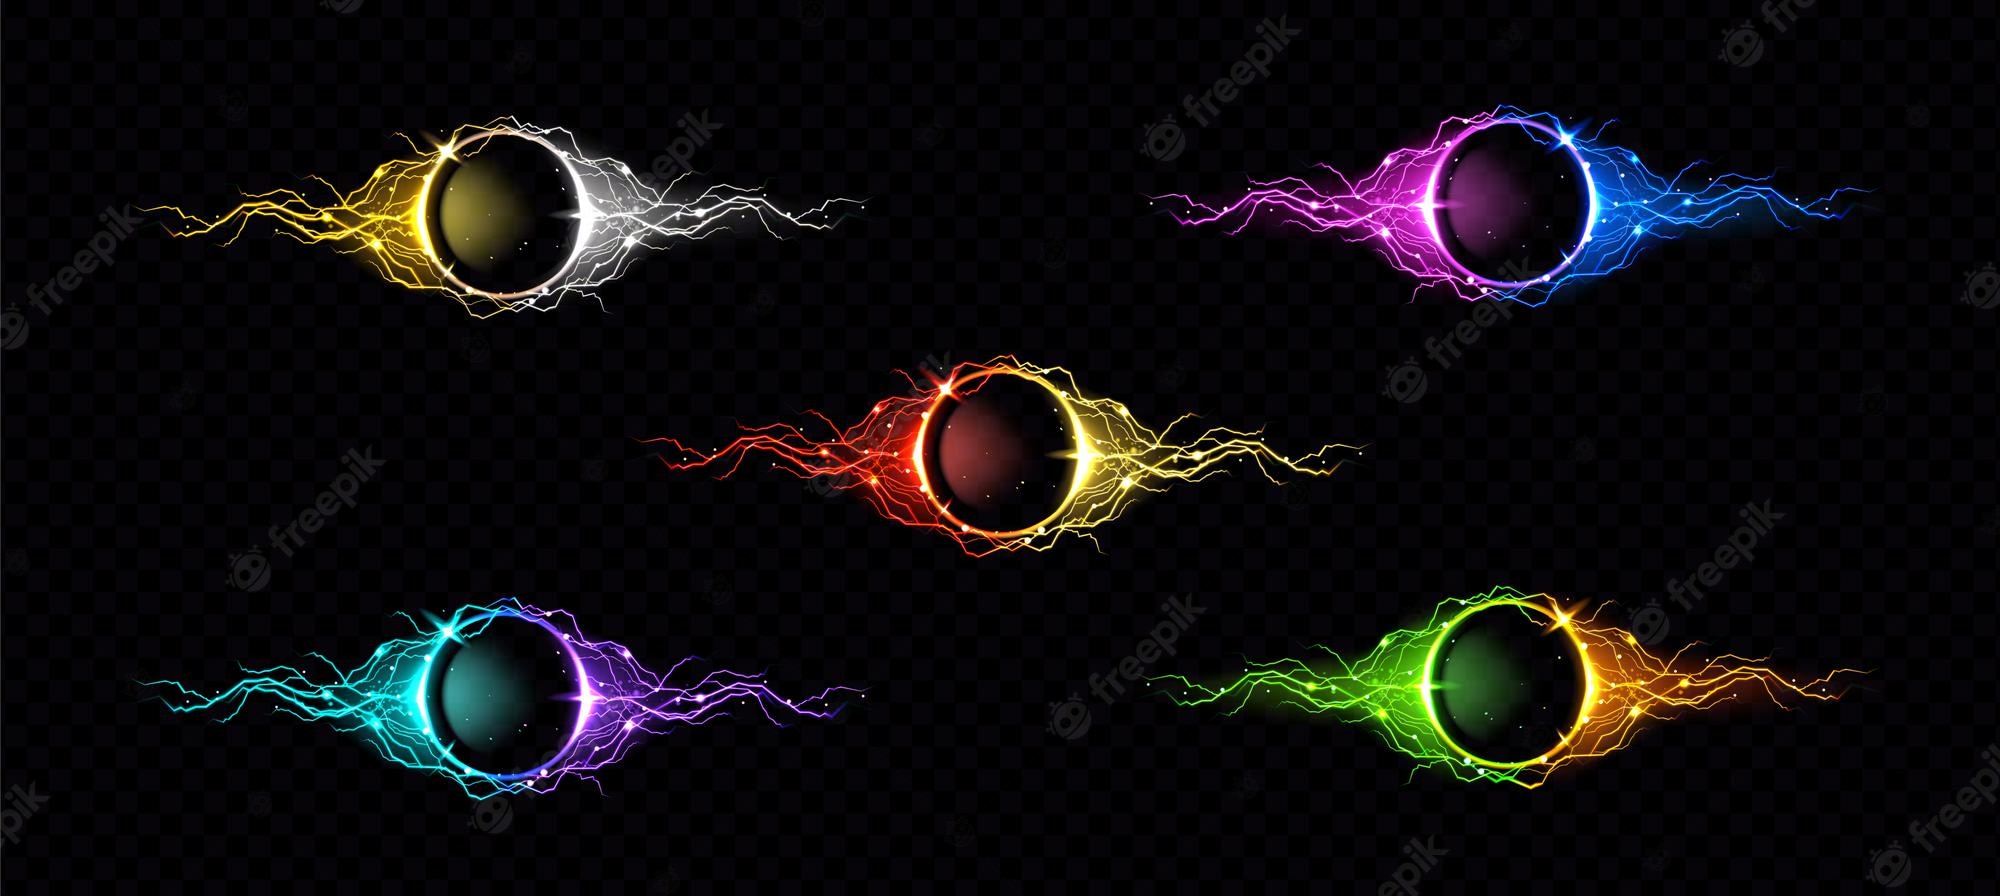 Neon lightning bolt Image. Free Vectors, & PSD